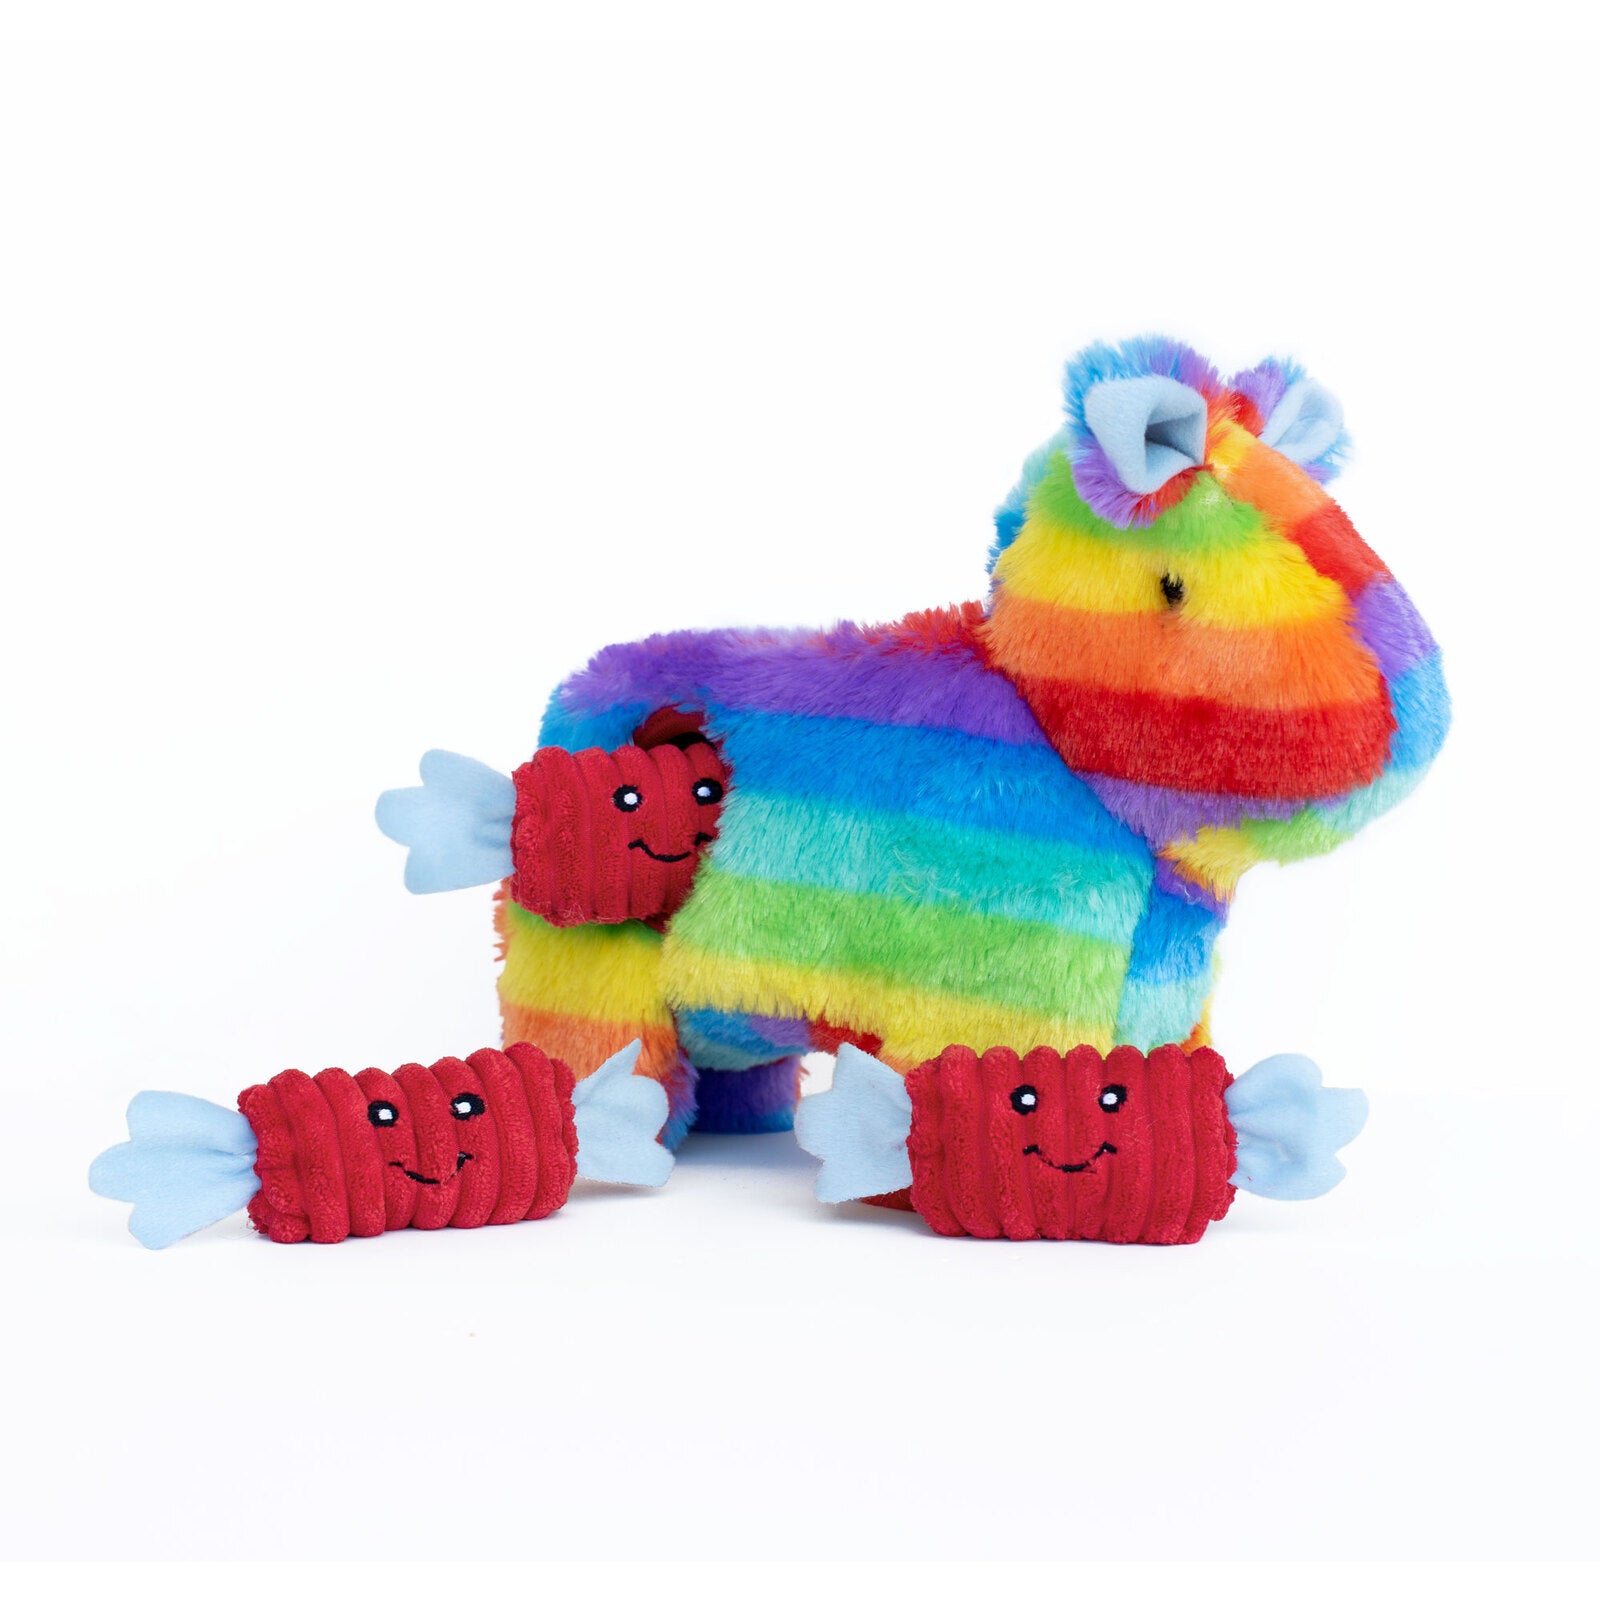 Zippy Paws Interactive Burrow - Rainbow Pinata with Candy